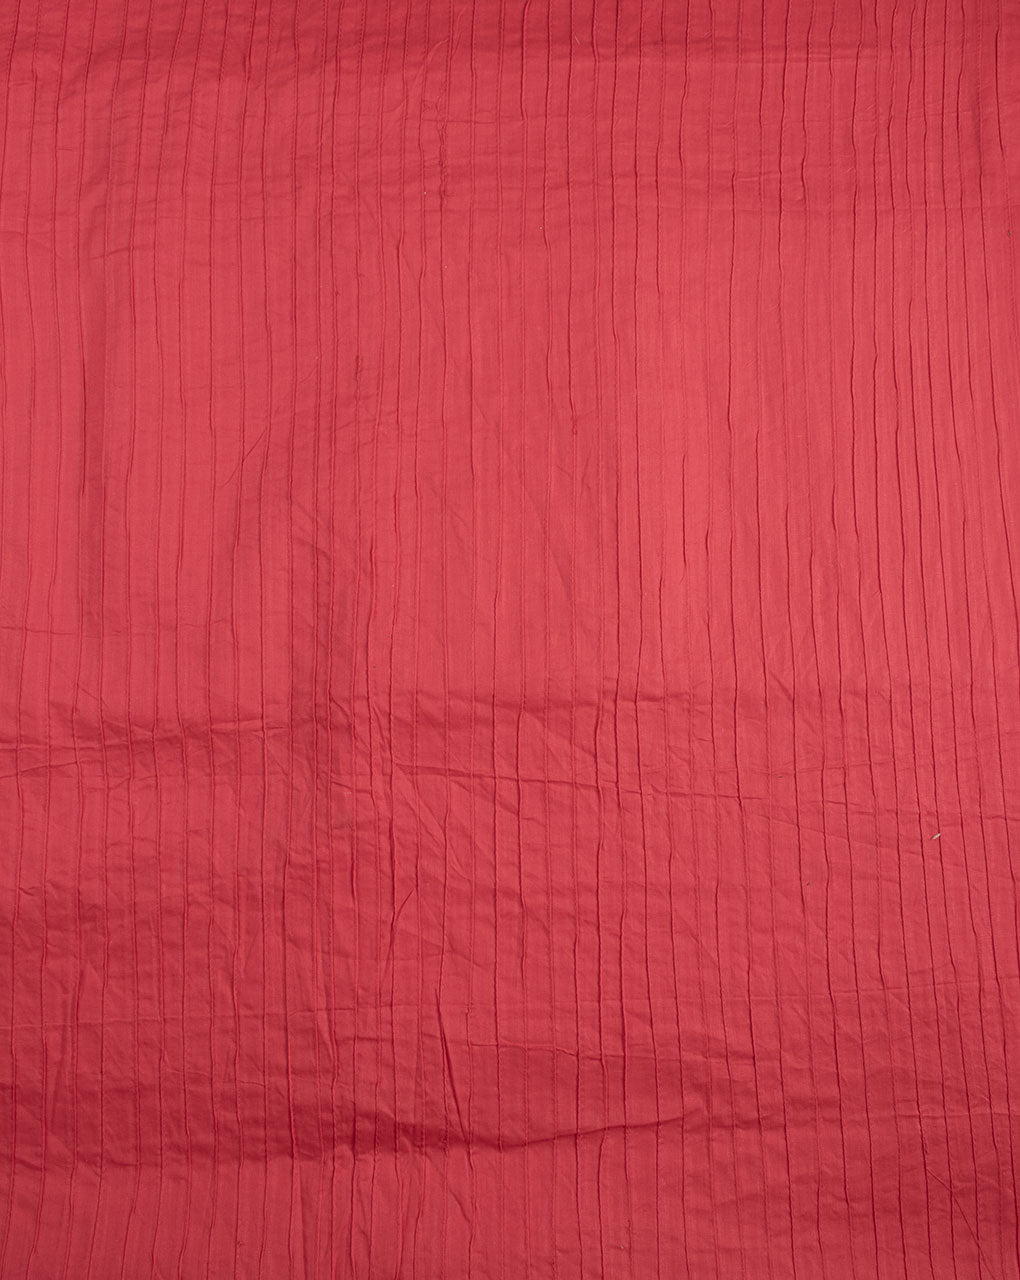 Salmon Pin-Tucks Cotton Fabric ( Width 36 Inch ) - Fabriclore.com